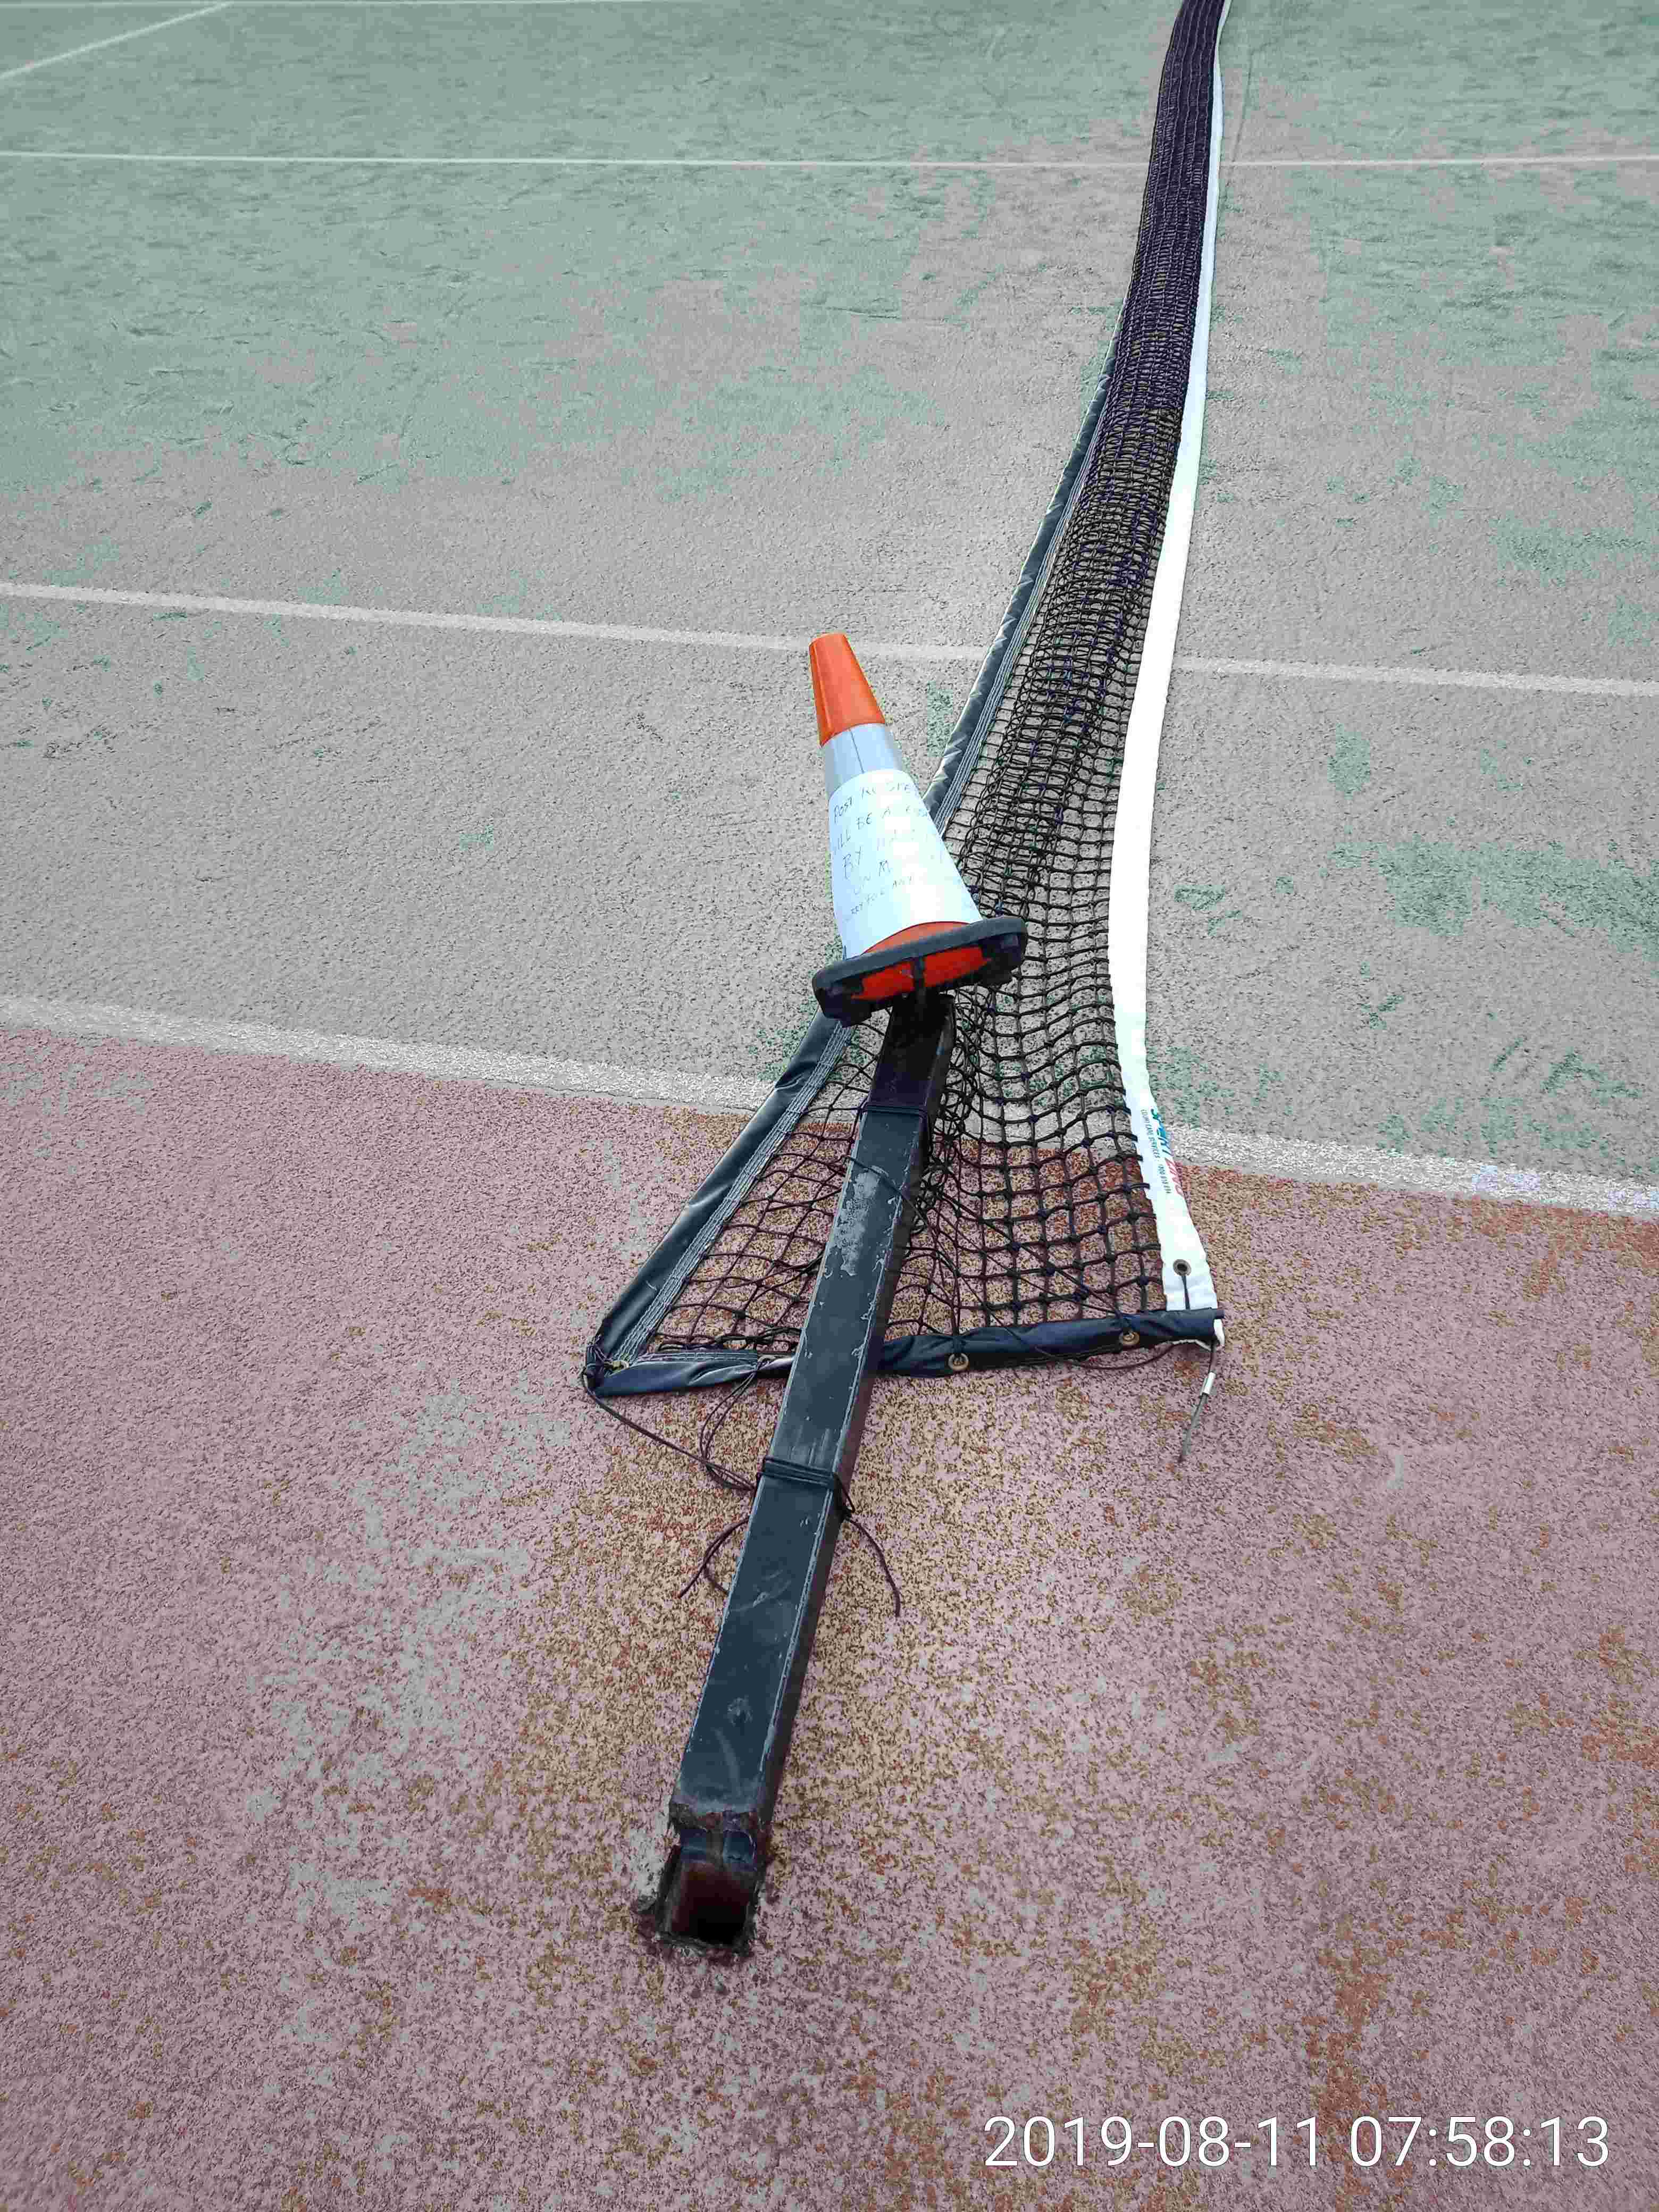 SP52948-tennis-court-2-damage-photo-1-11Aug2019.jpg